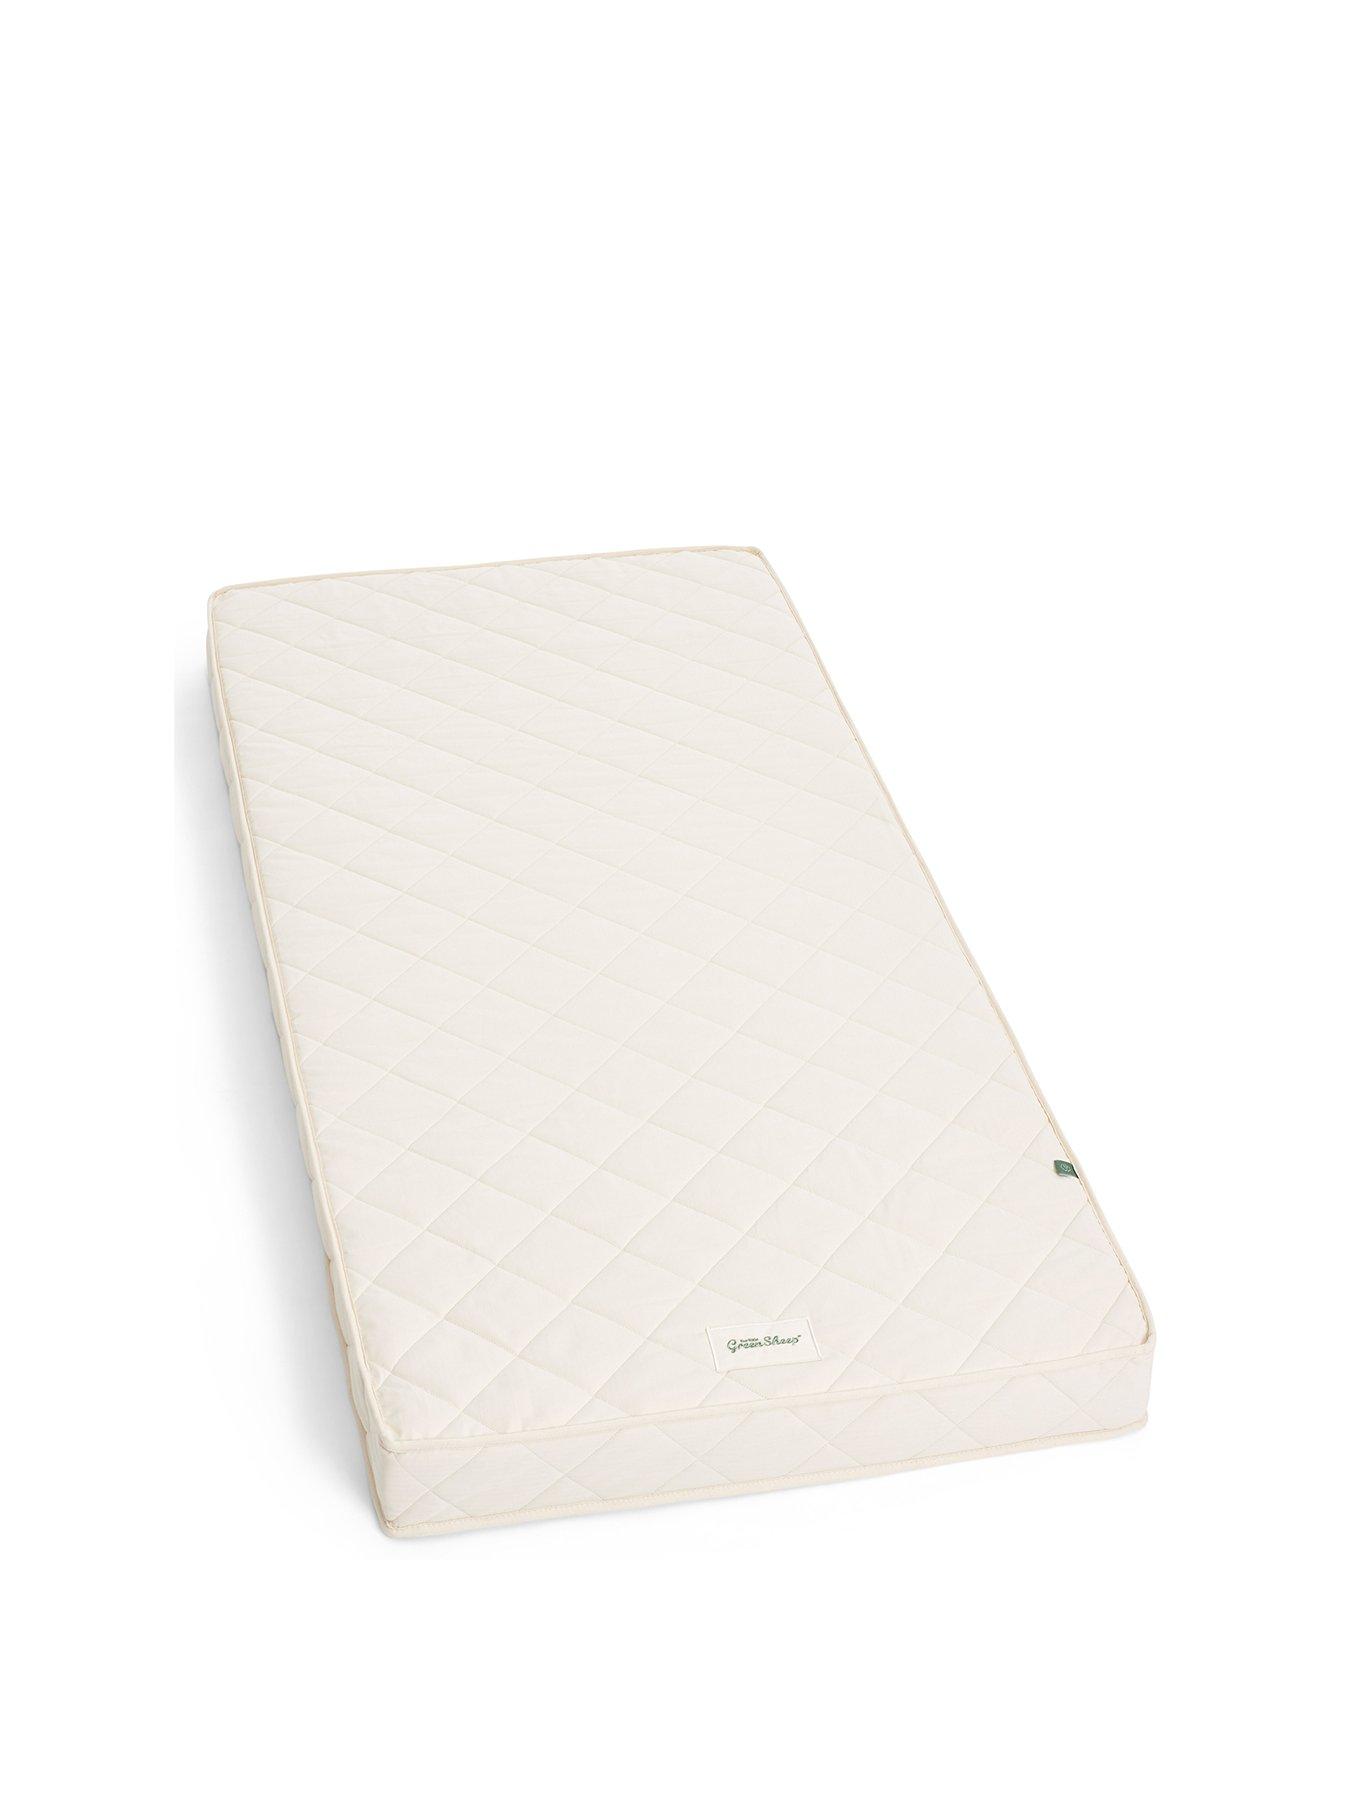 cot mattress 90 x 54